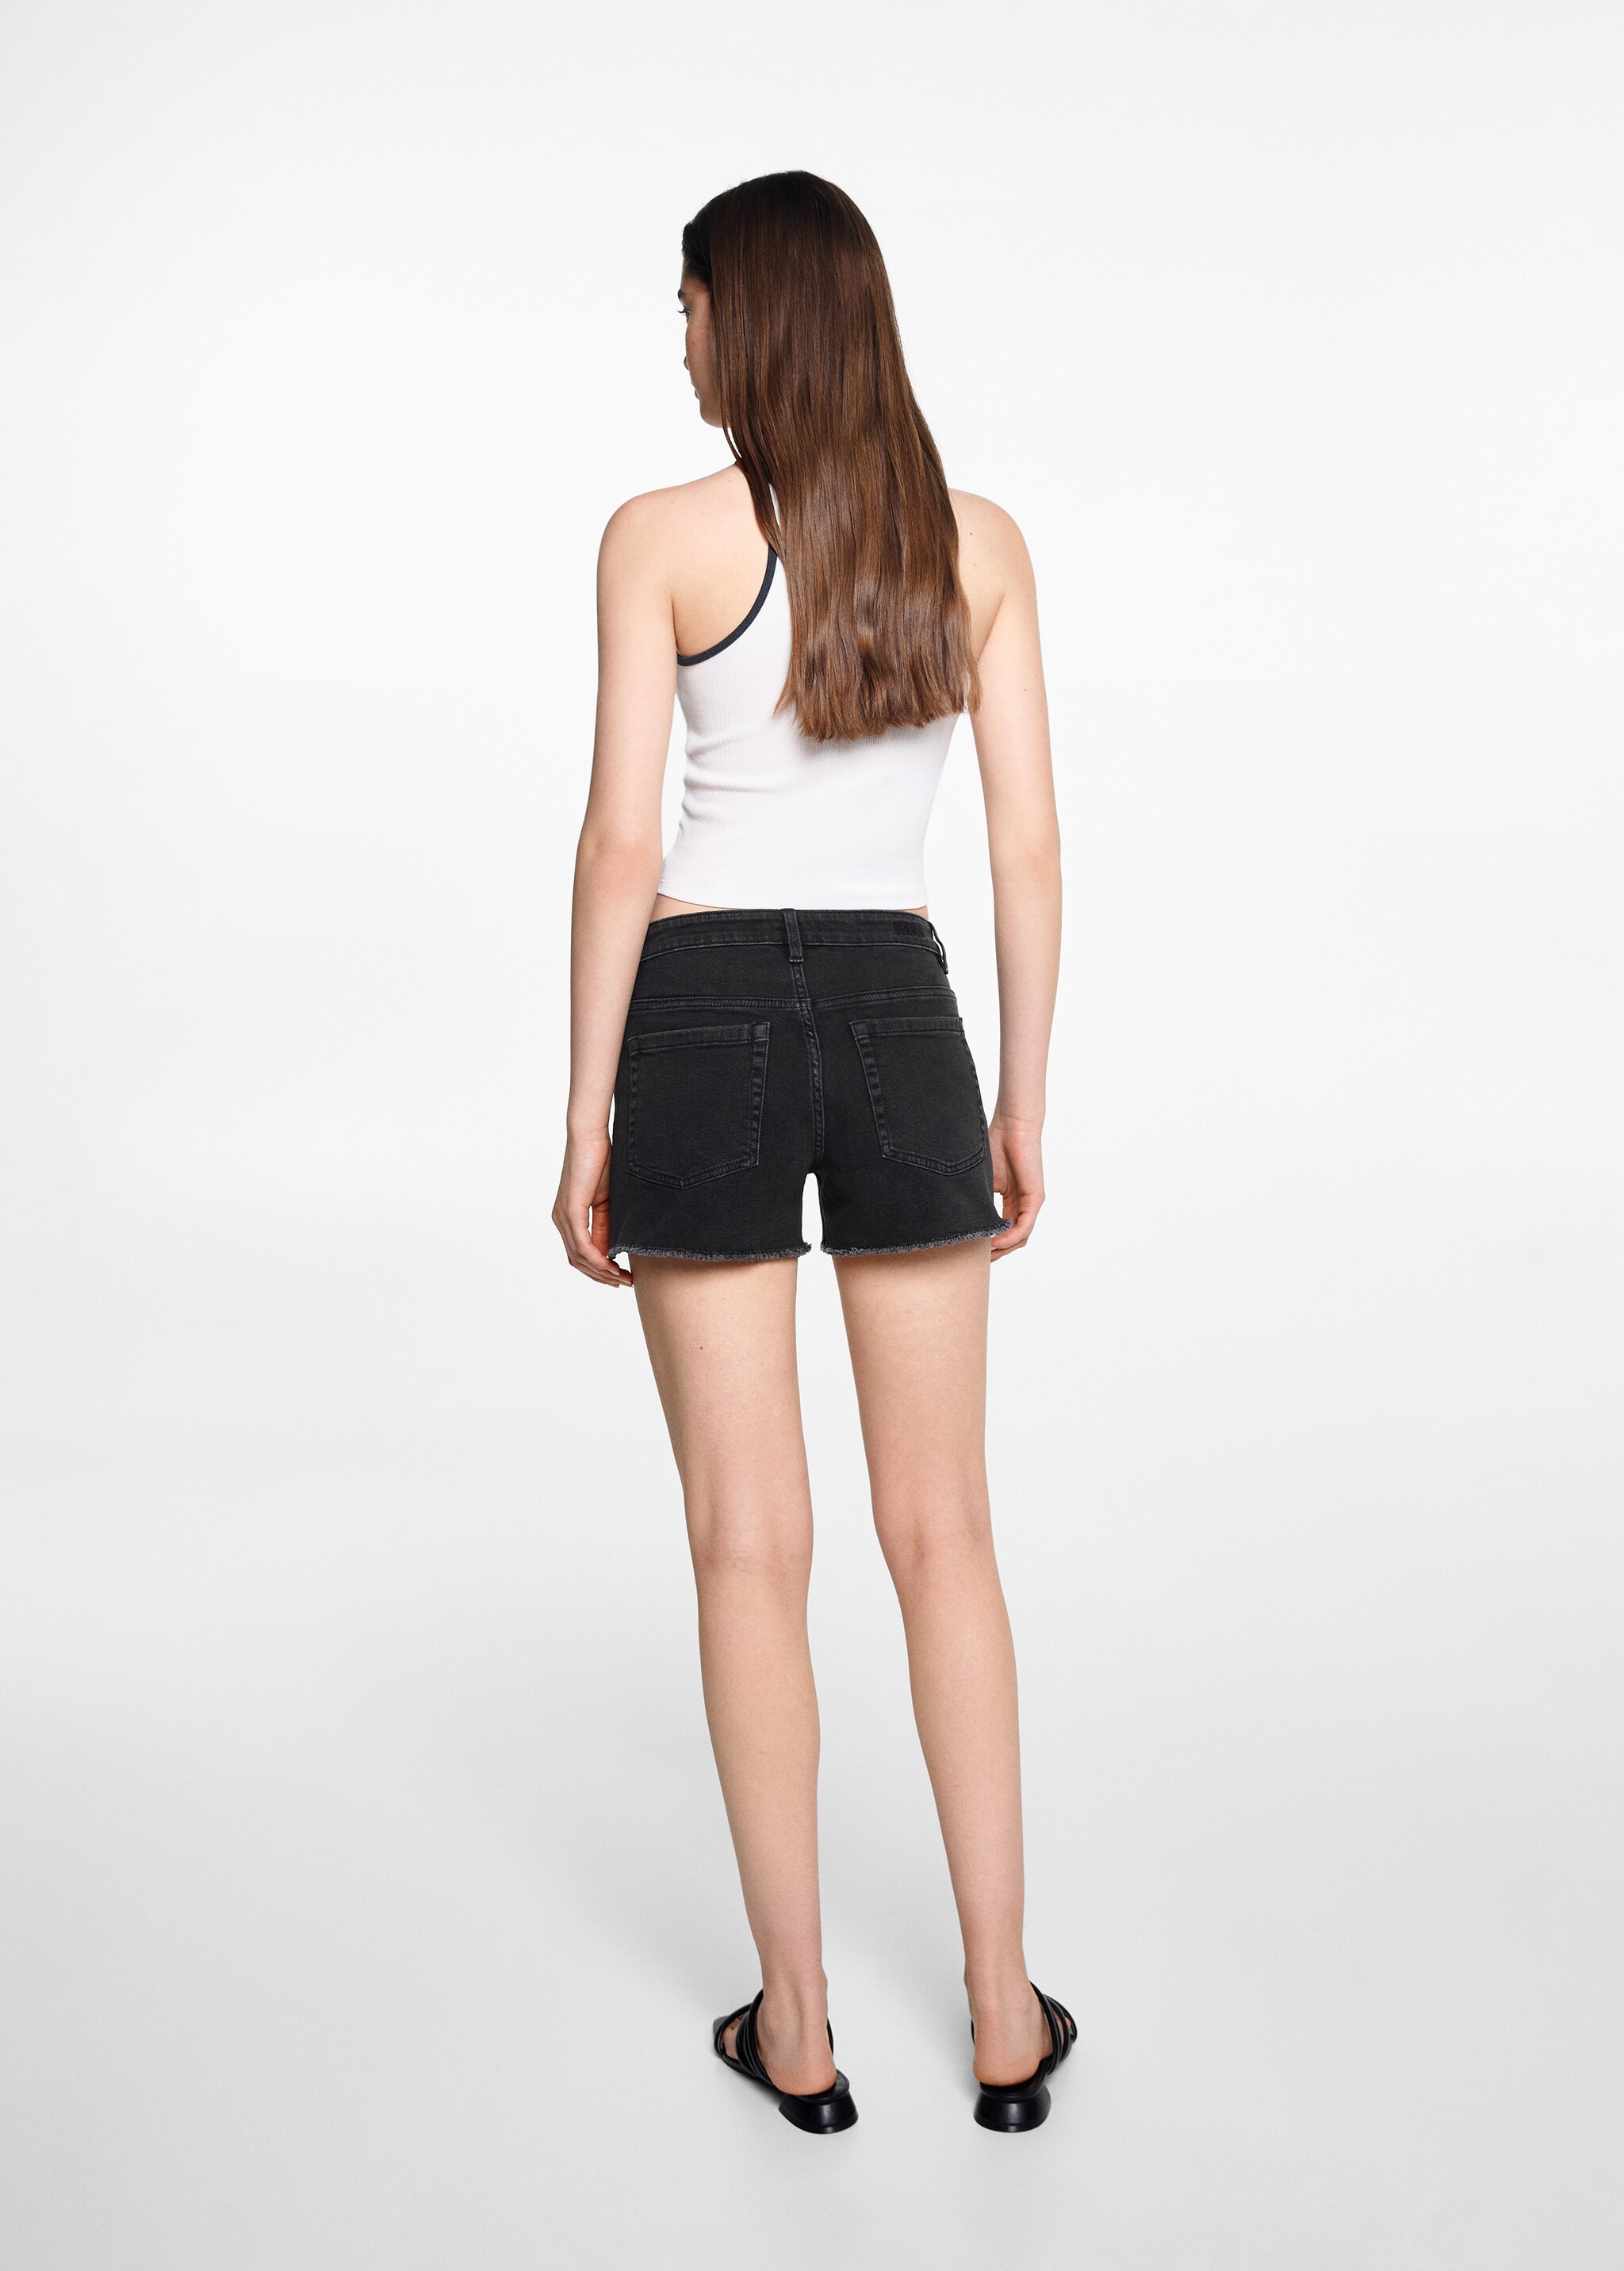 Medium-waist denim shorts - Reverse of the article